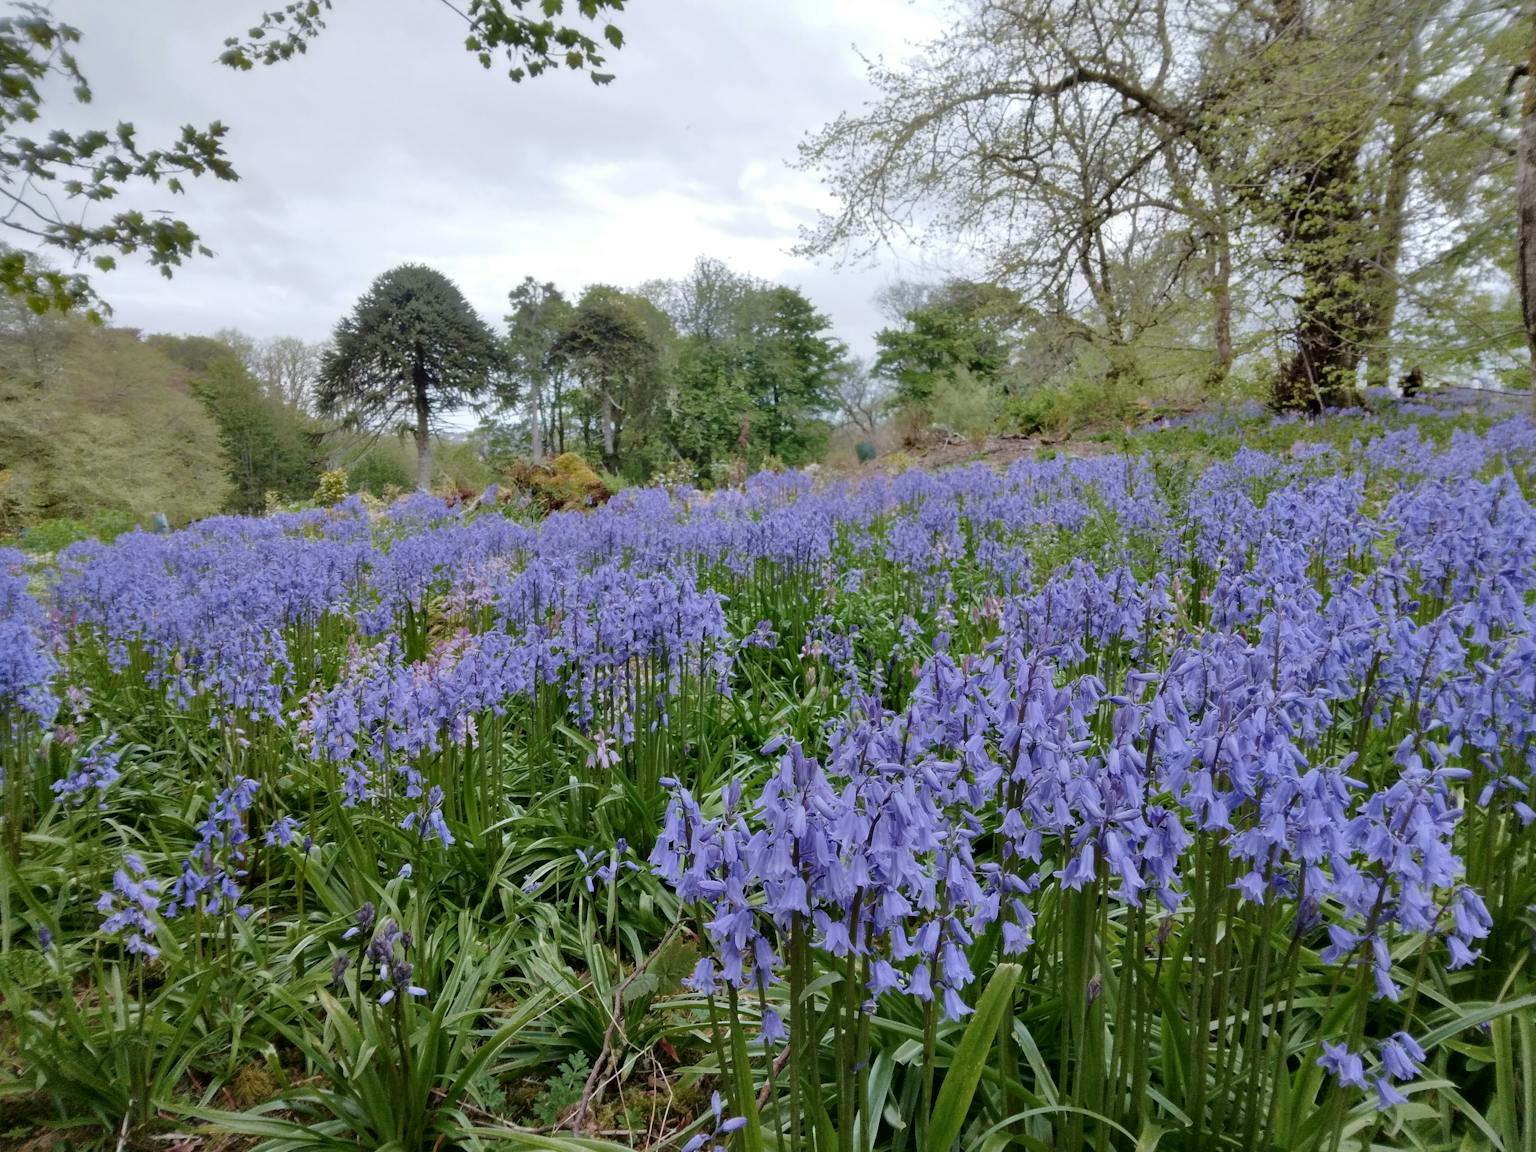 Woodland garden of bluebells